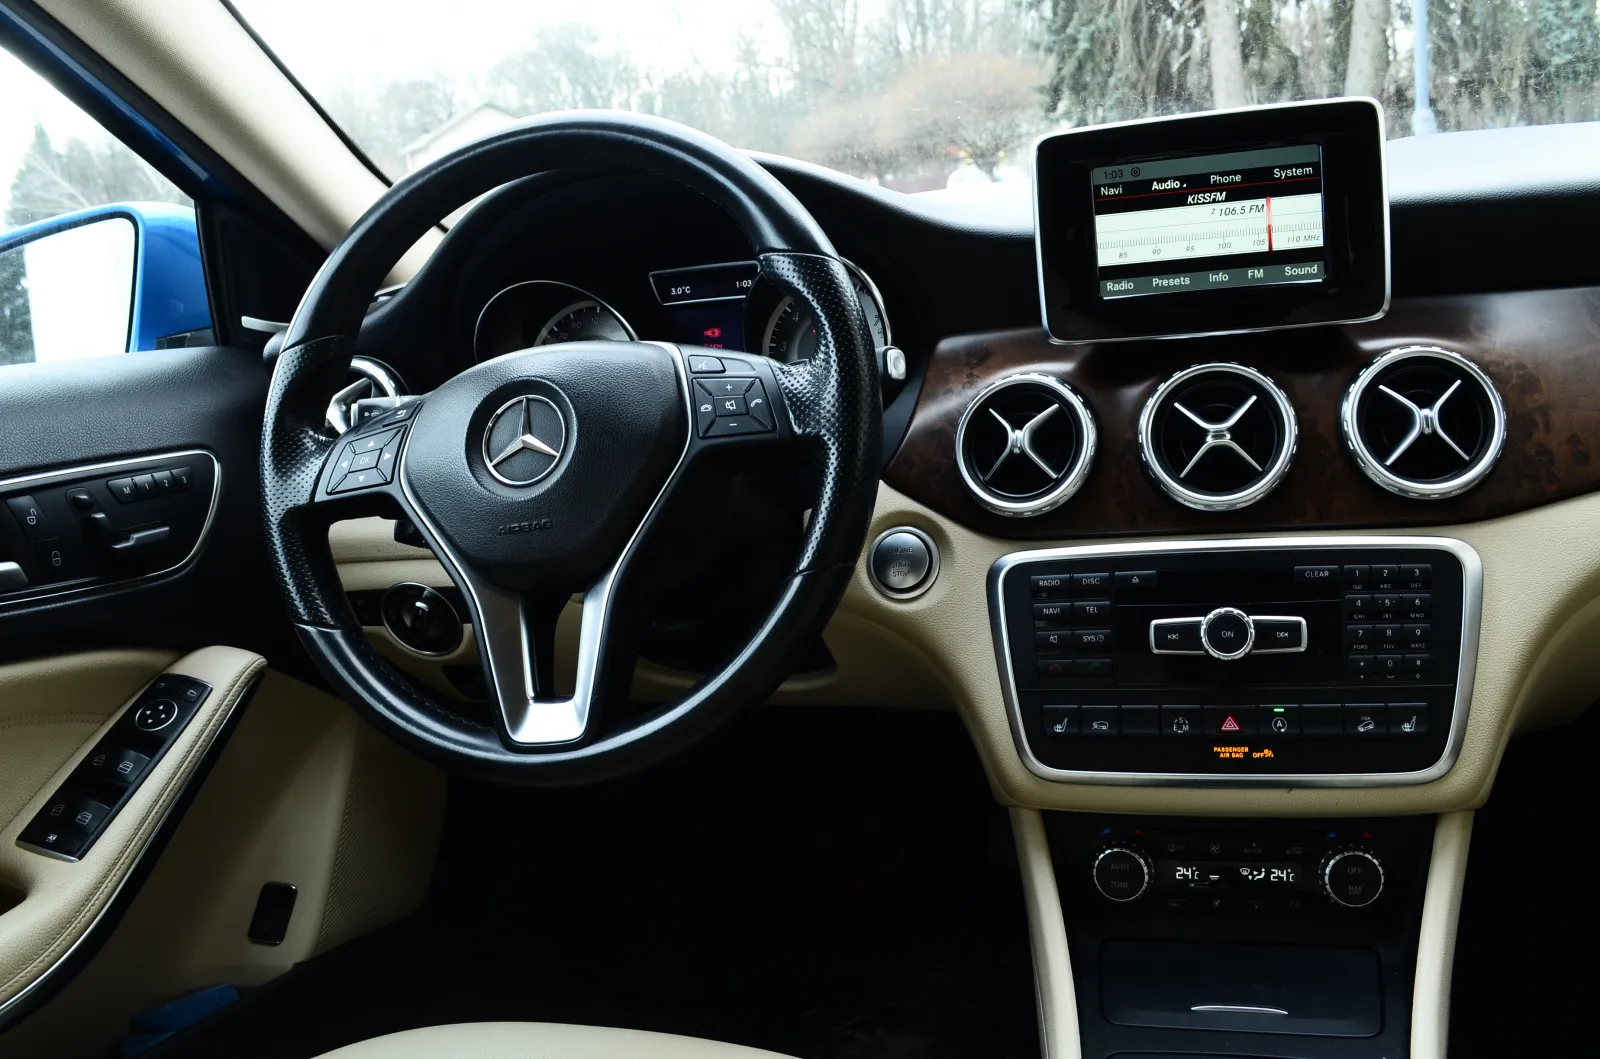 Mercedes-Benz GLA-Class 2015 купити в лізинг